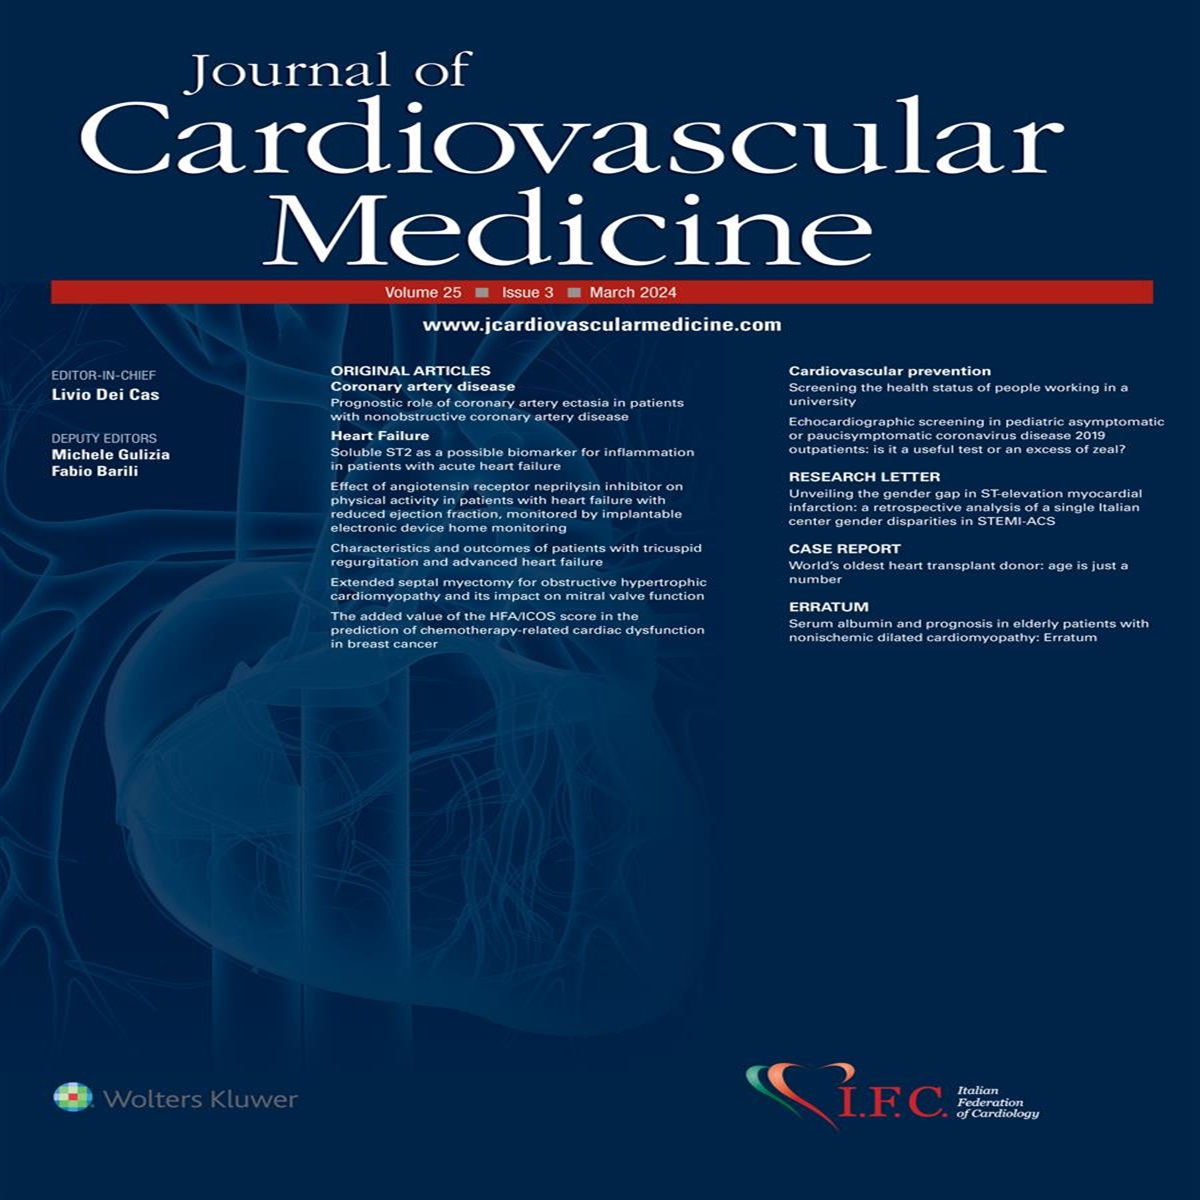 Serum albumin and prognosis in elderly patients with nonischemic dilated cardiomyopathy: Erratum